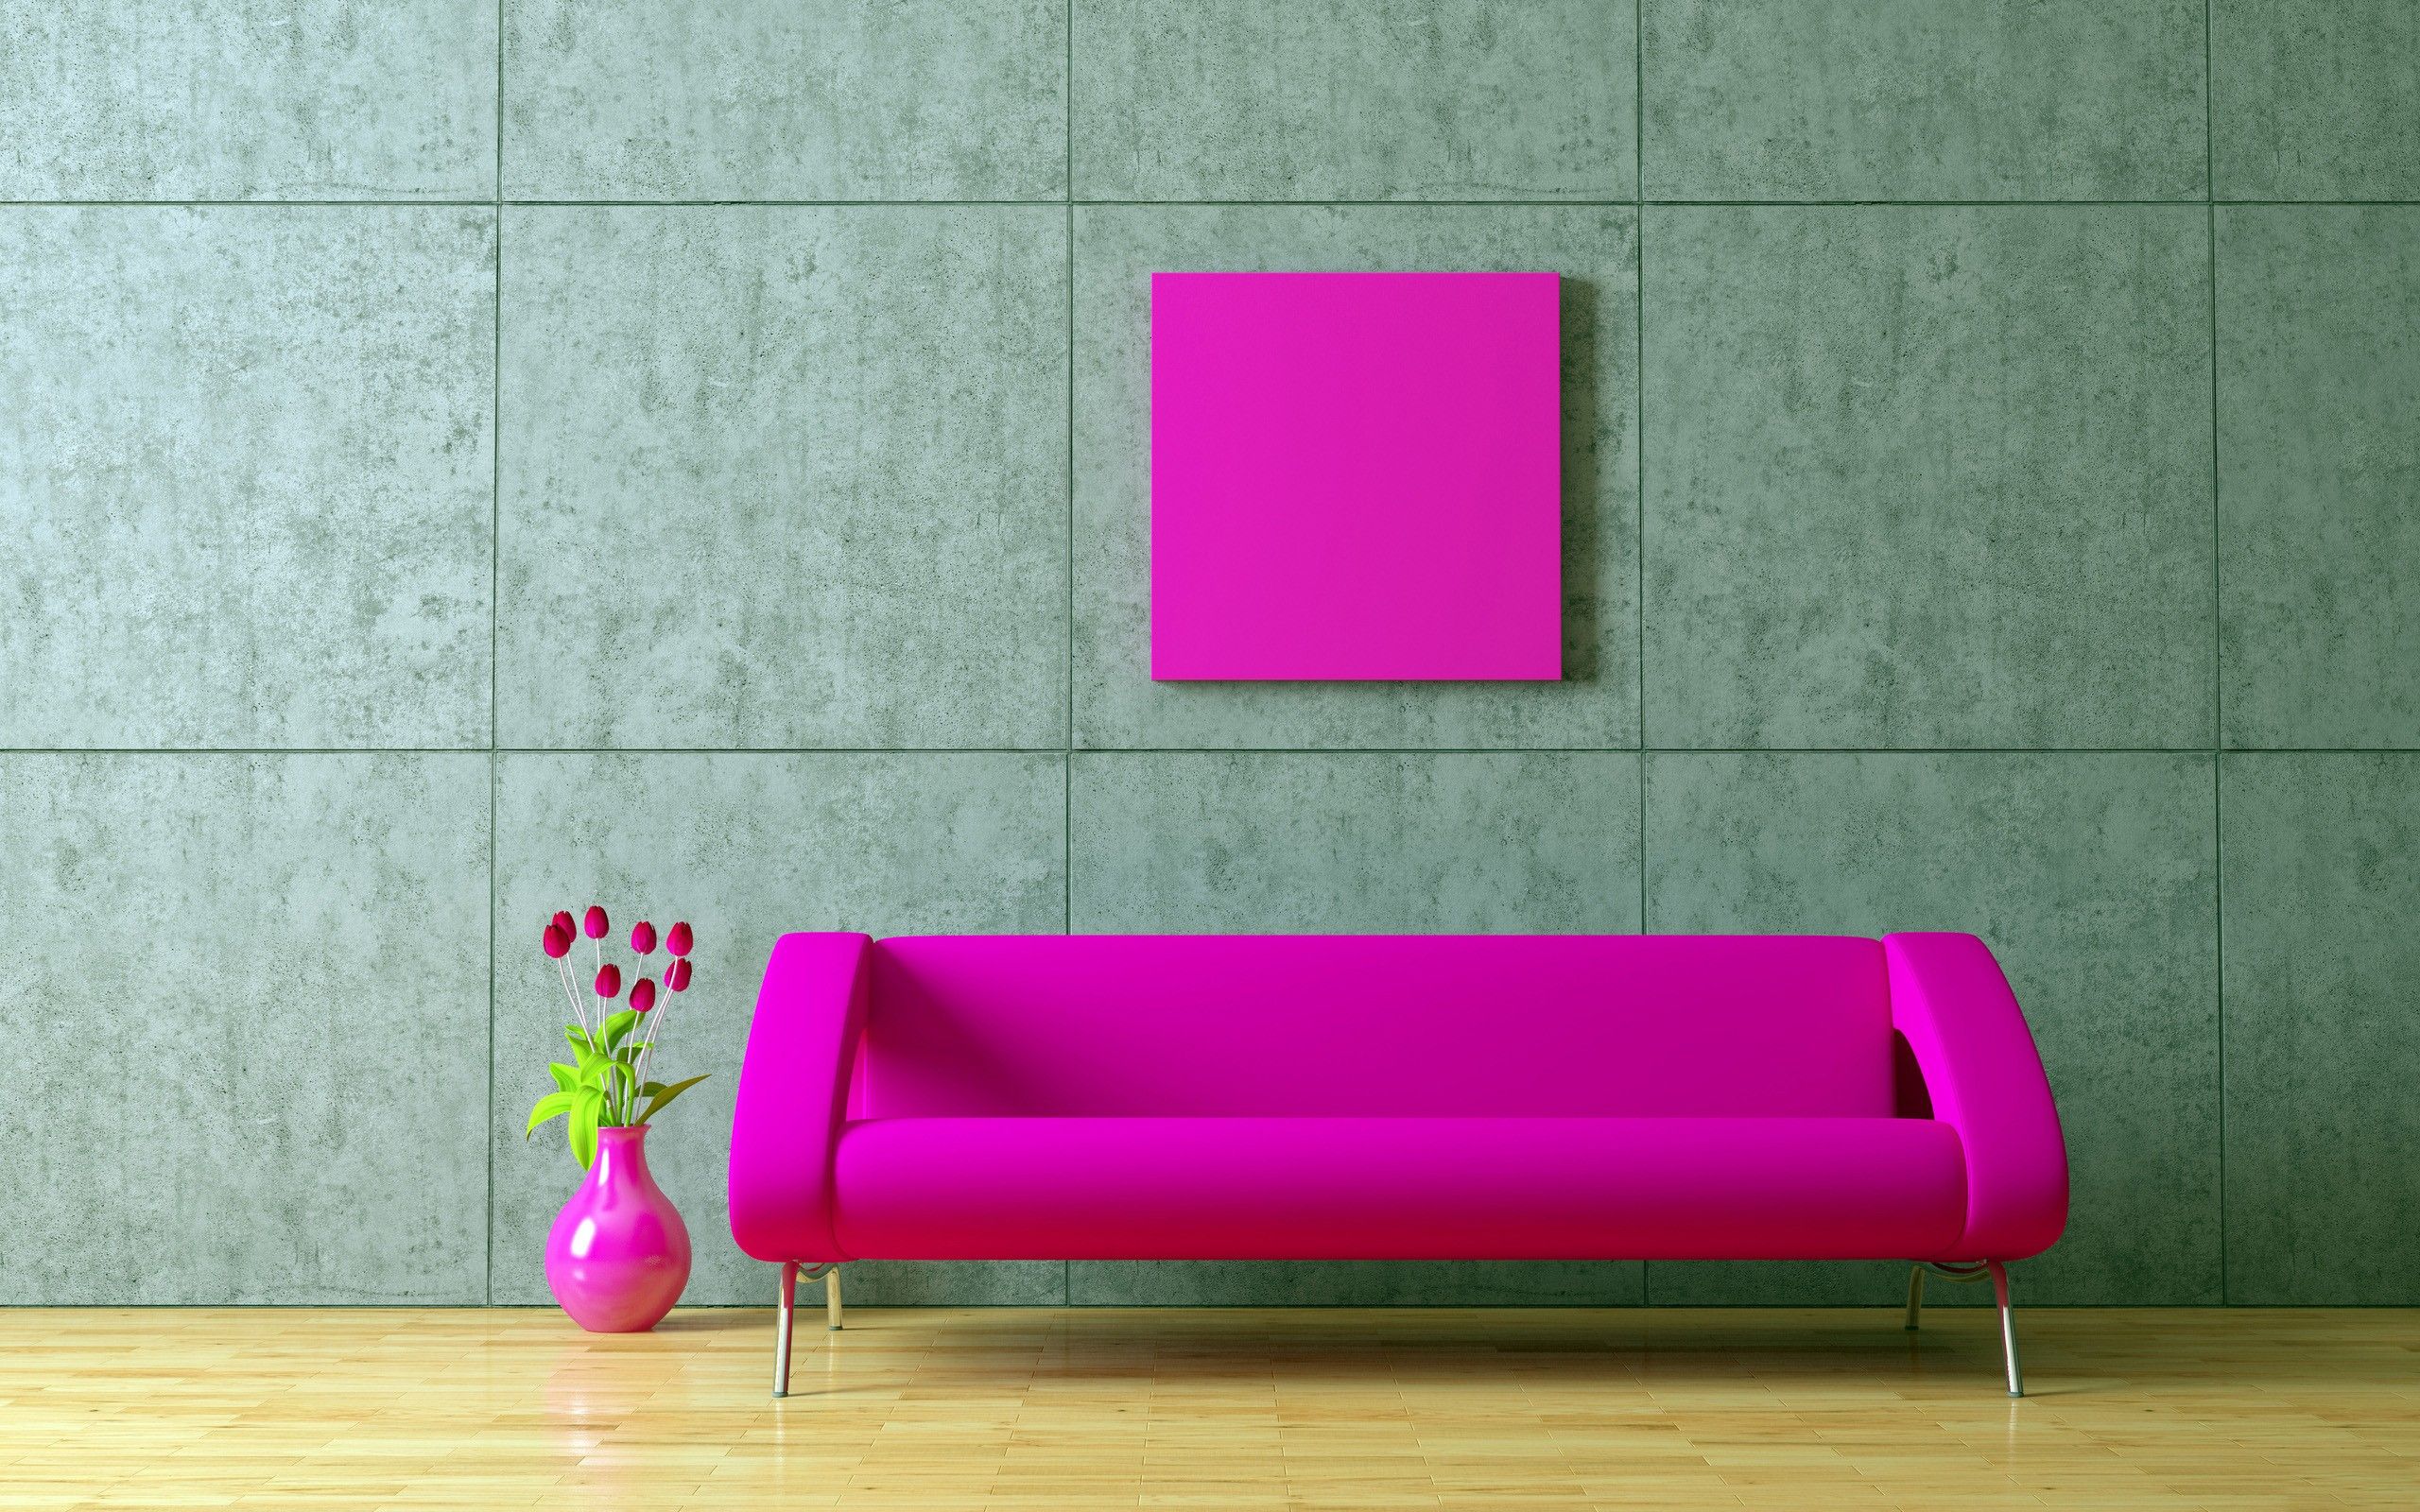 Furniture Hd Wallpaper | Free HD Desktop Wallpapers - Widescreen ...